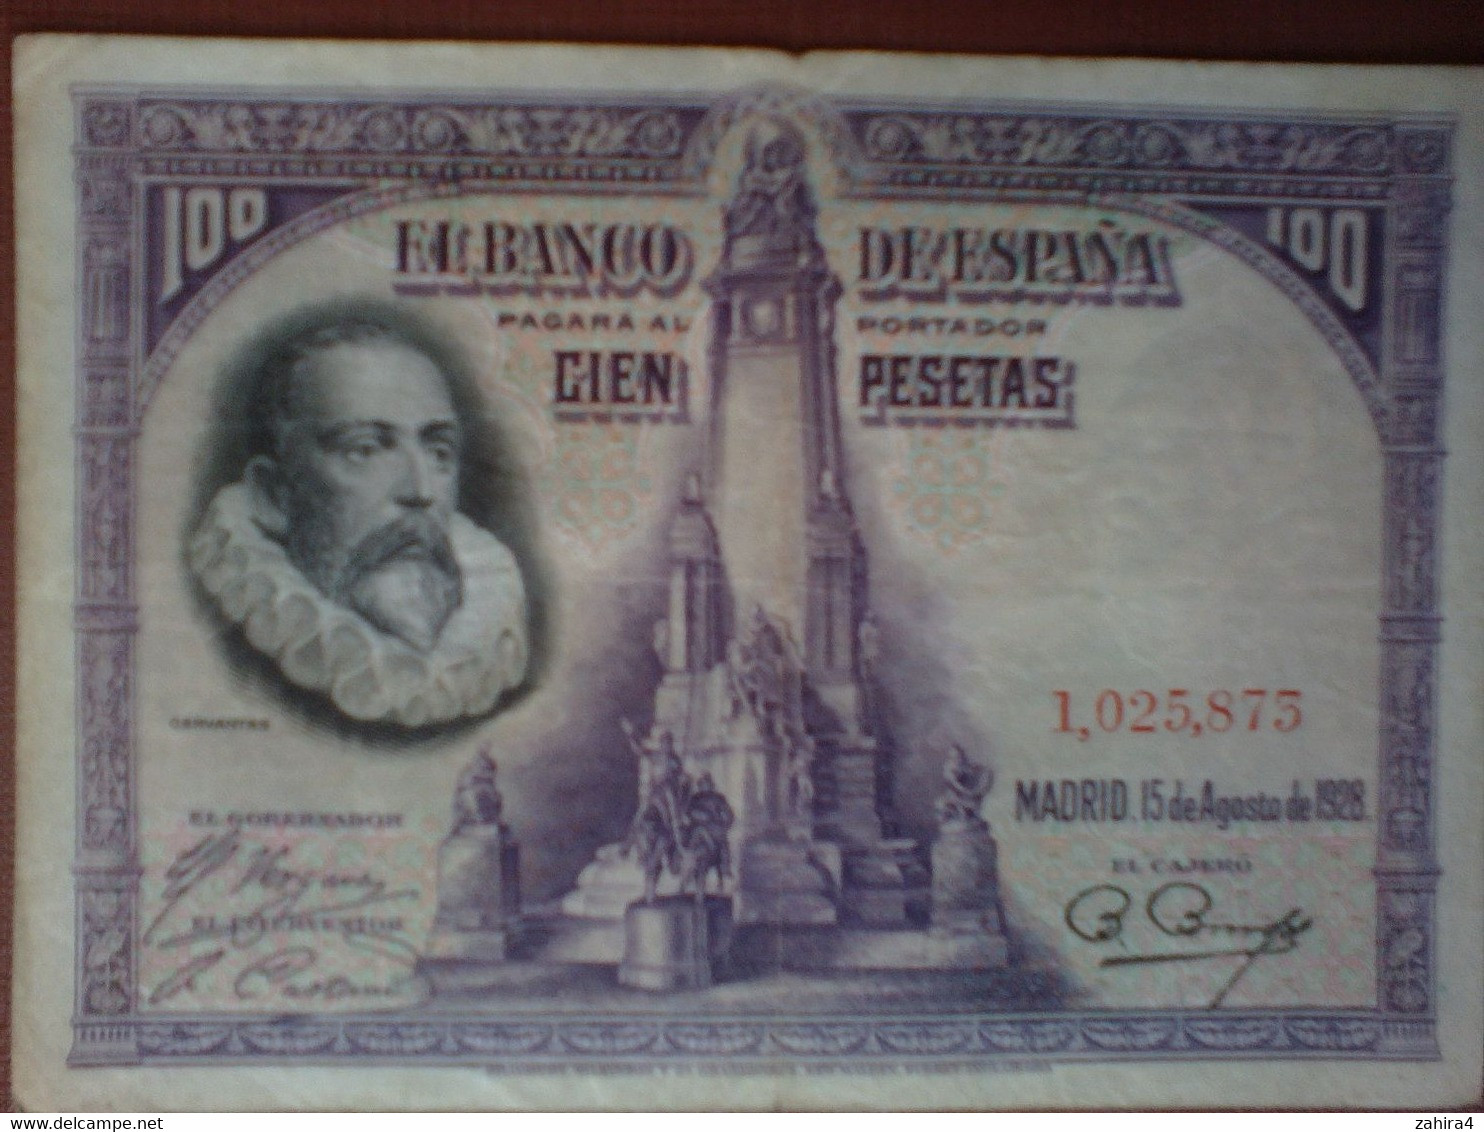 100 Pesetas - El Banco De Espana - 1,025,873 - Madrid 15 De Agosto De 1928 - Cervantes - Cien Pesetas - 100 Peseten